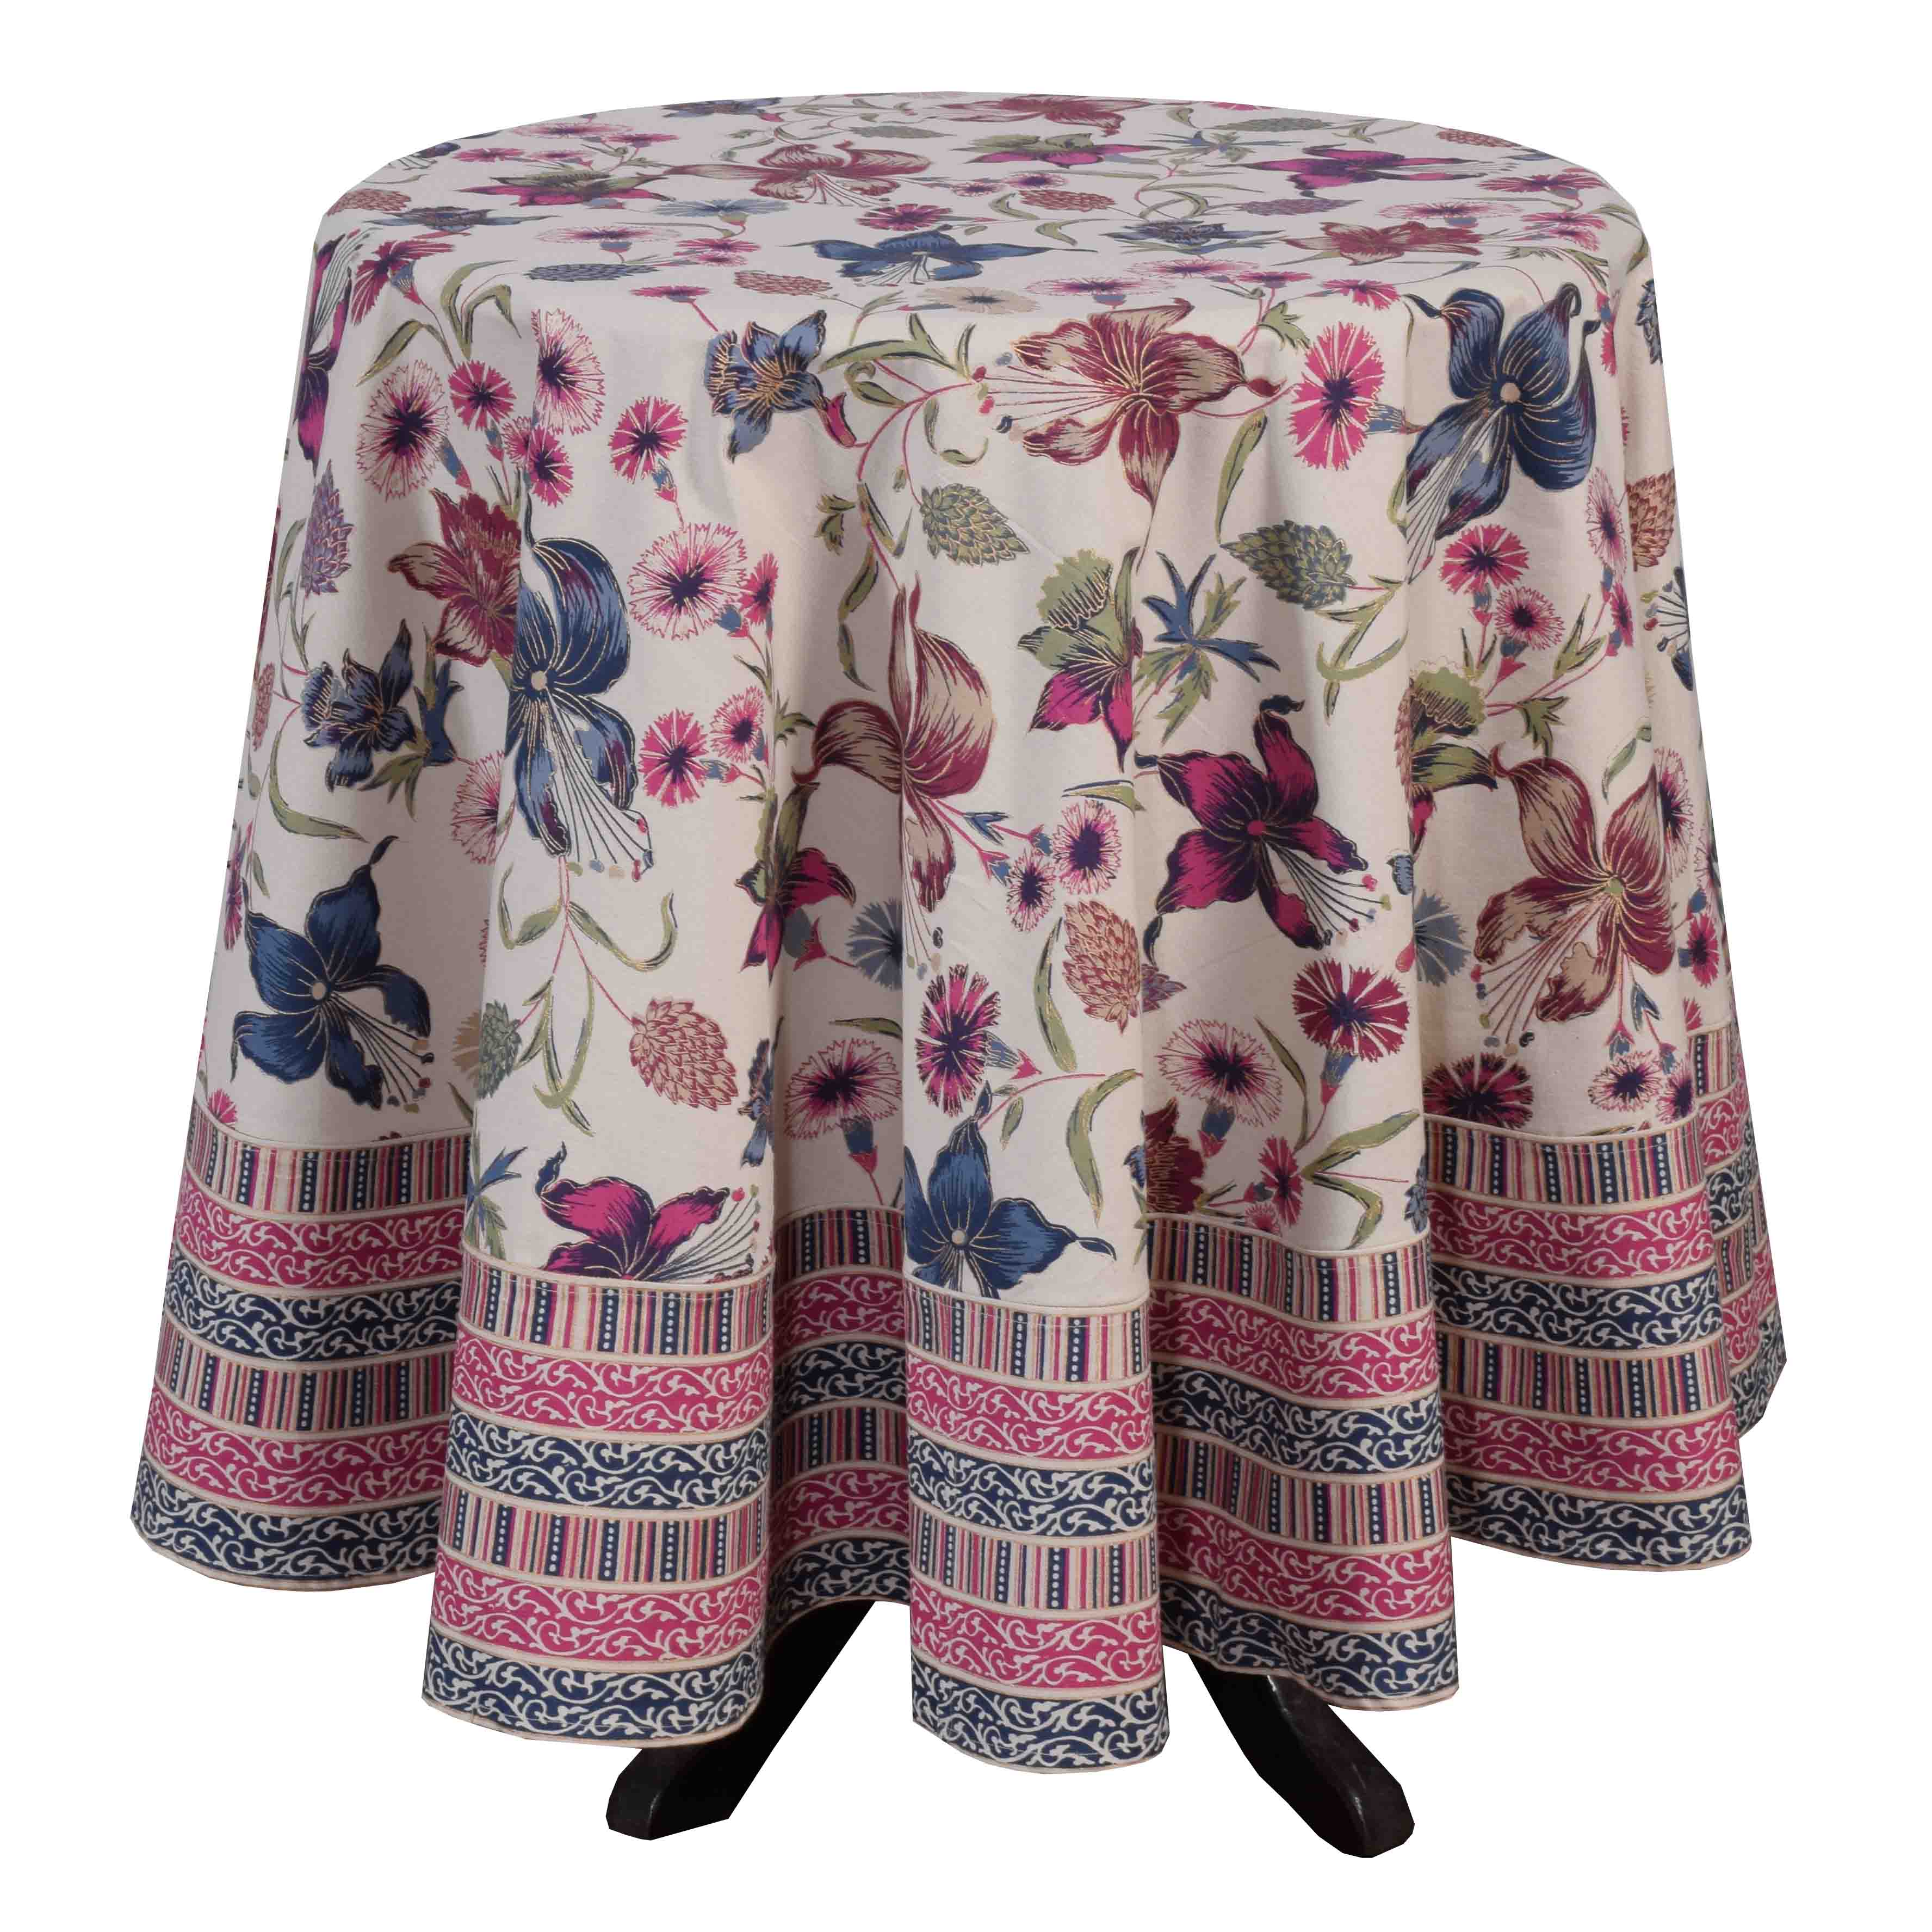 Lilum Round Tablecloth - Tarini Online